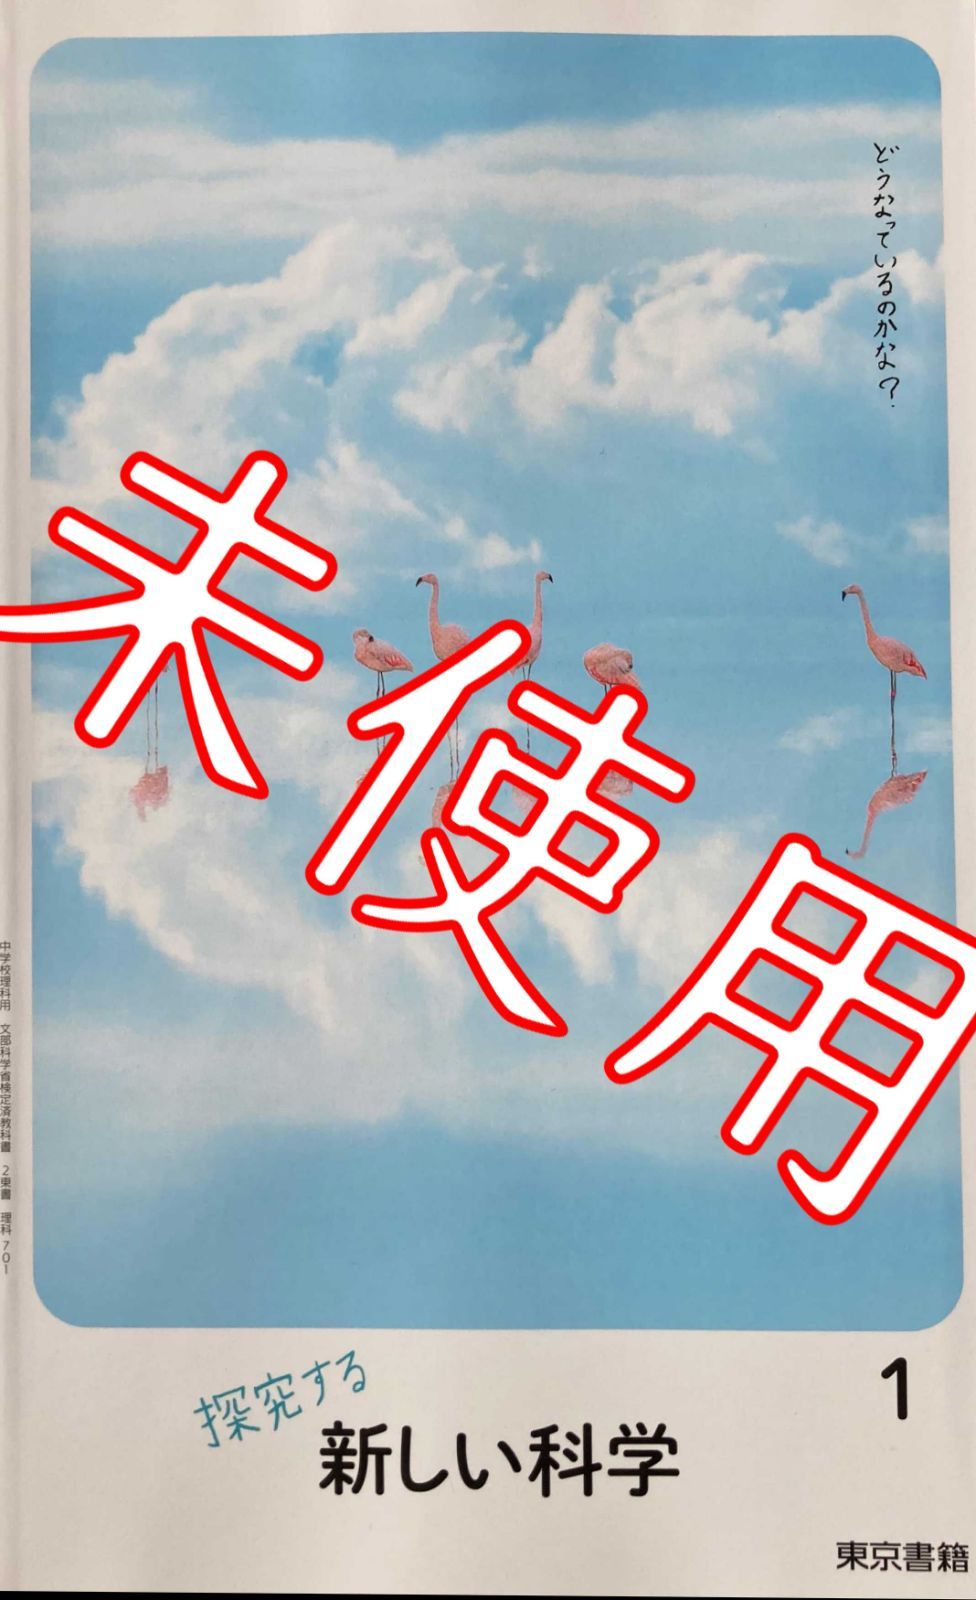 中学 新しい科学3 東京書籍 高価値セリー - 語学・辞書・学習参考書